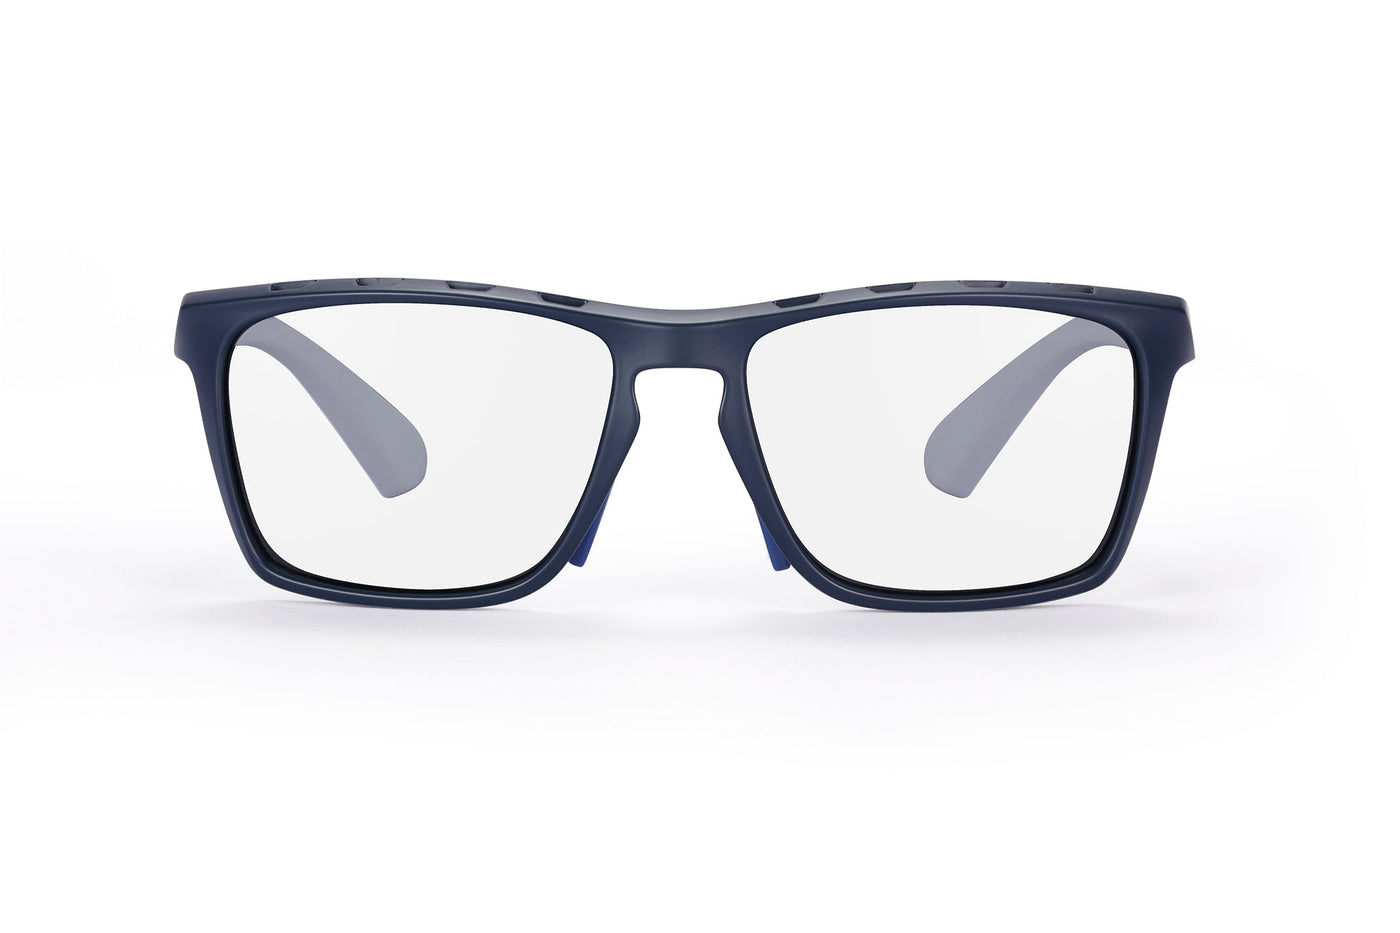 FORTIS - Clear Prescription Sports Glasses